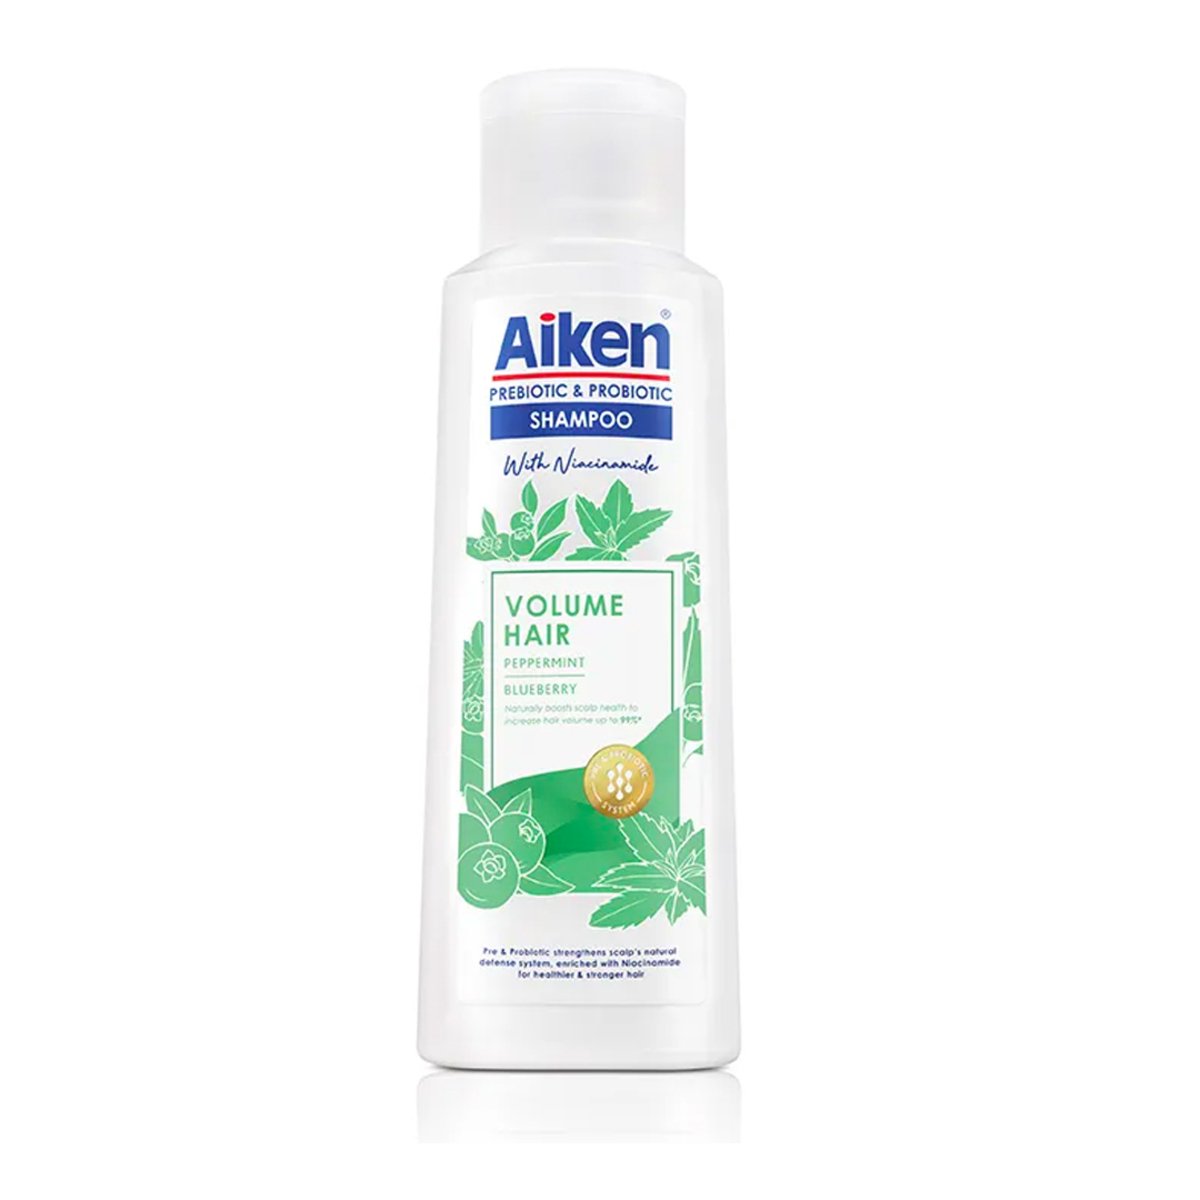 Aiken Prebiotic & Probiotic Shampoo Volume Hair 350g